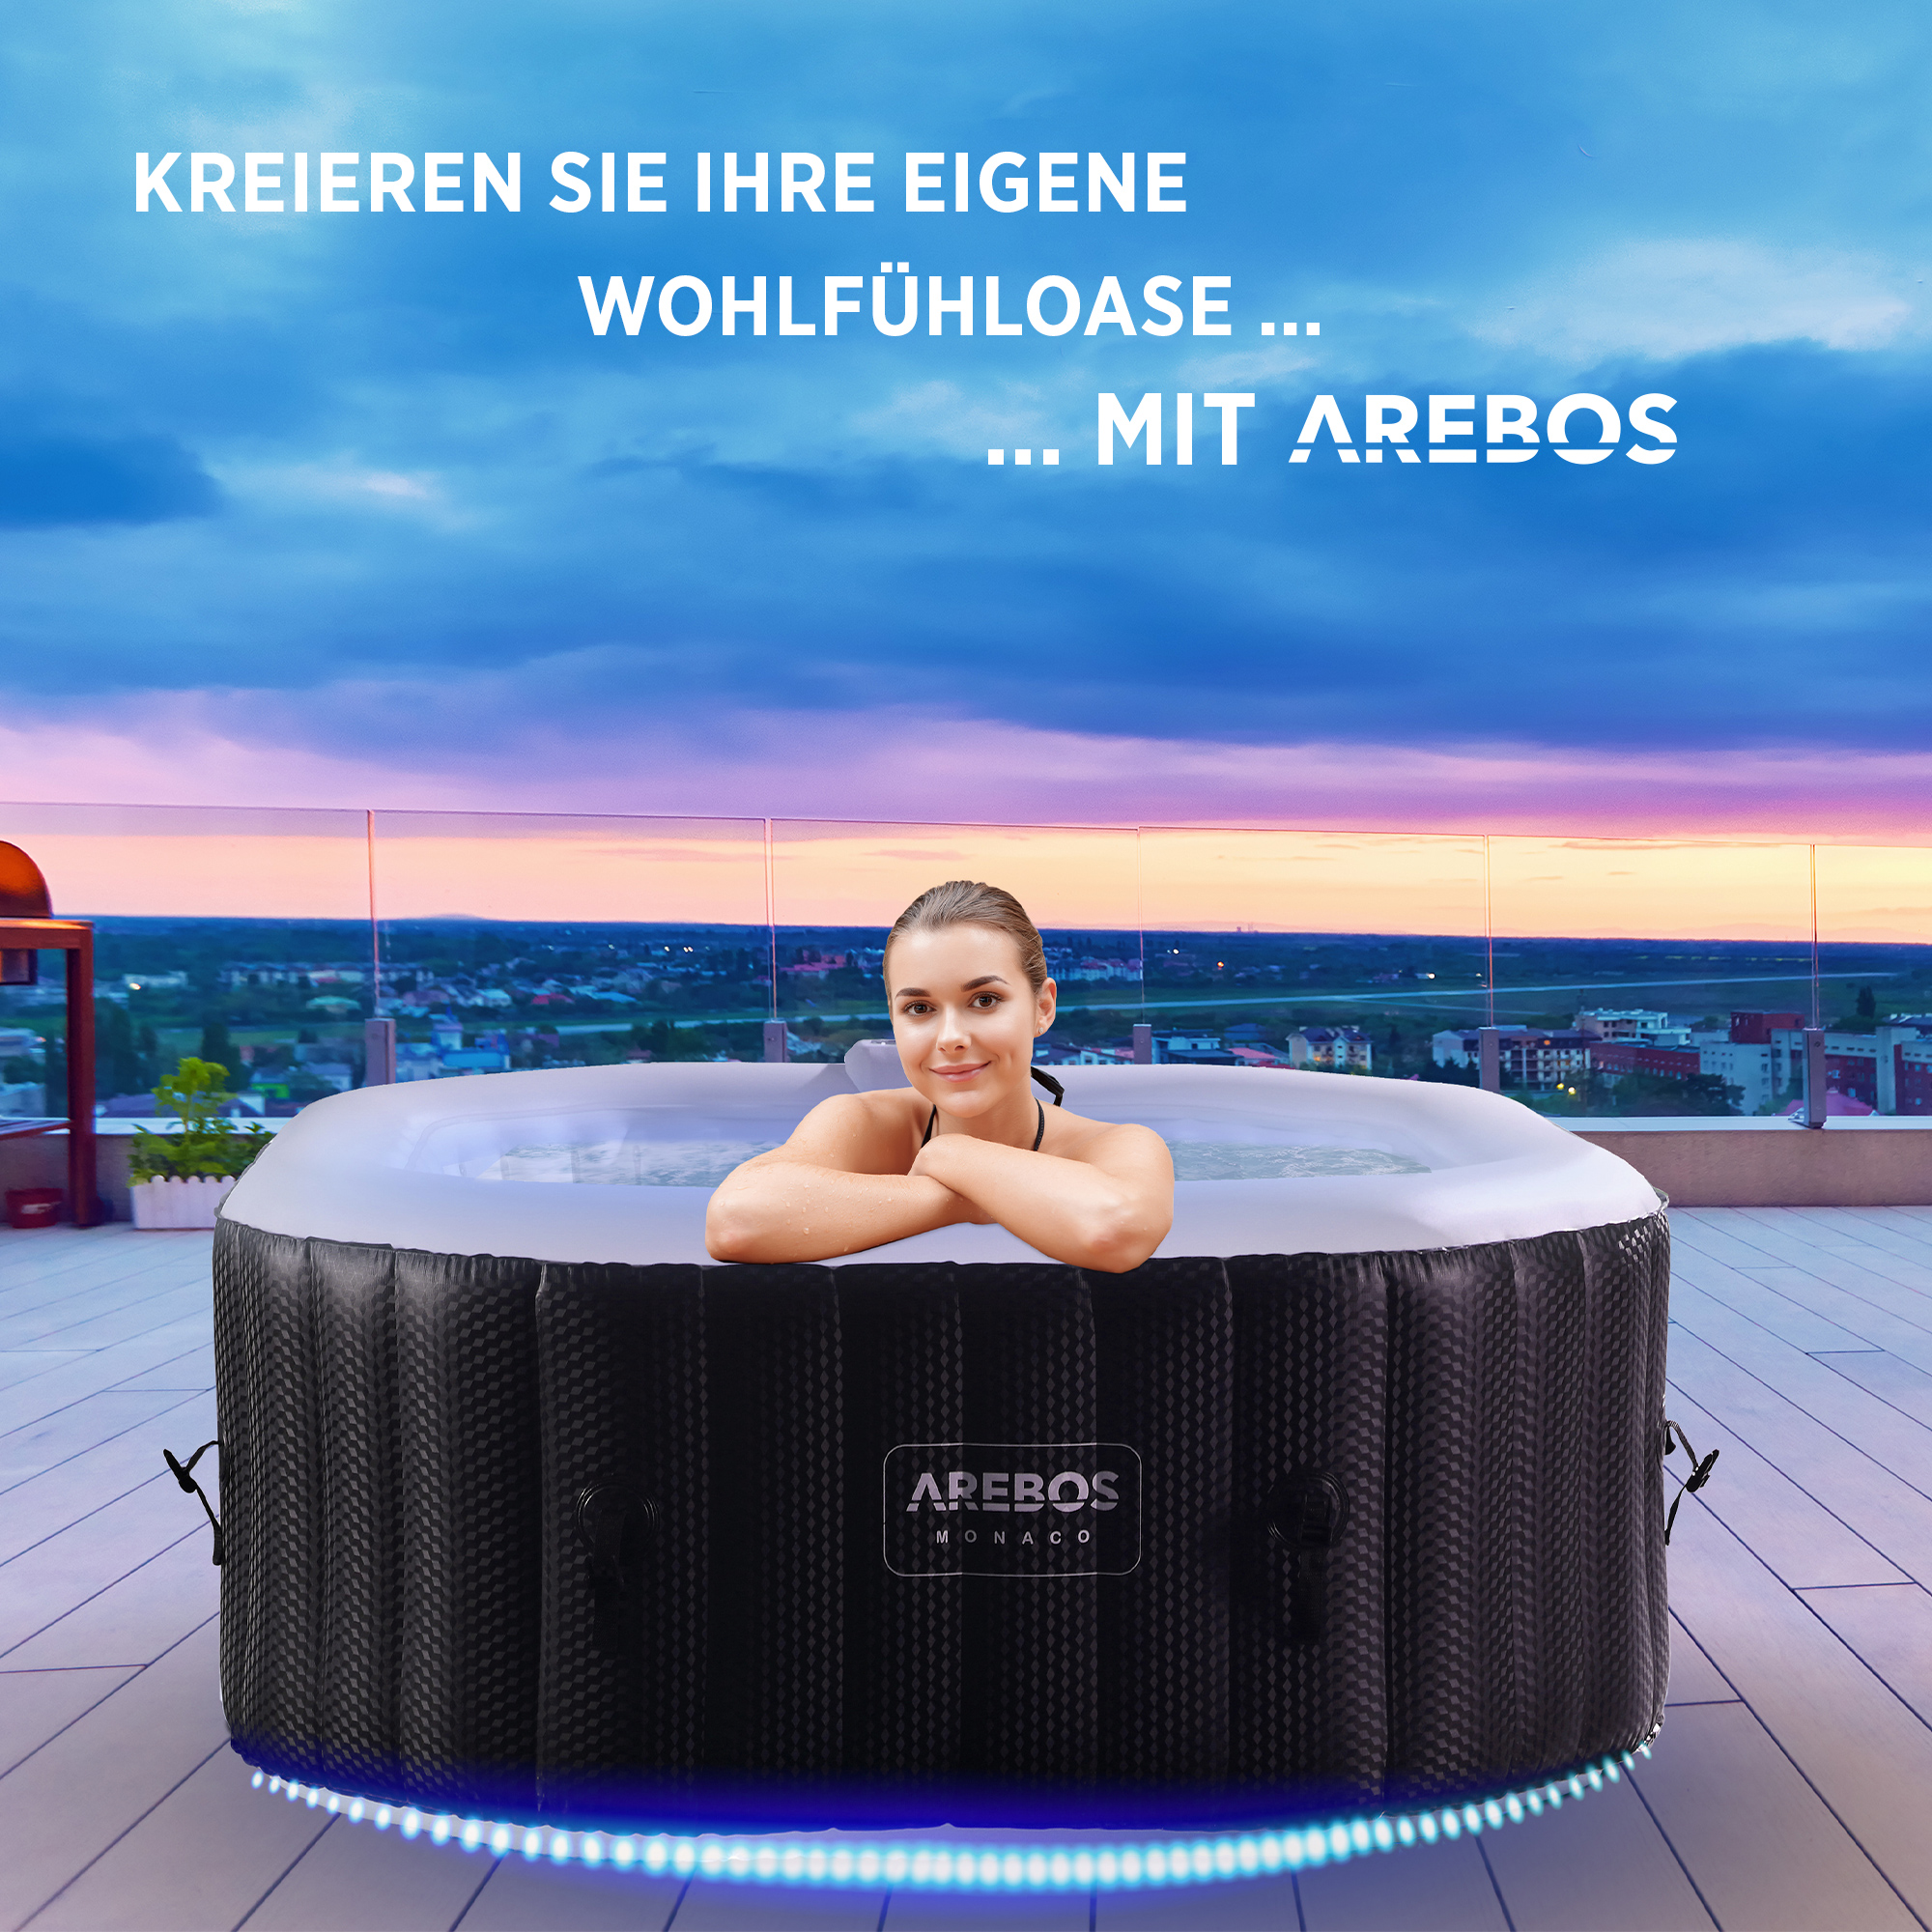 mit 4 LED 2400 In-Outdoor AREBOS Schwarz Whirlpool Personen Massage oktogonal W,